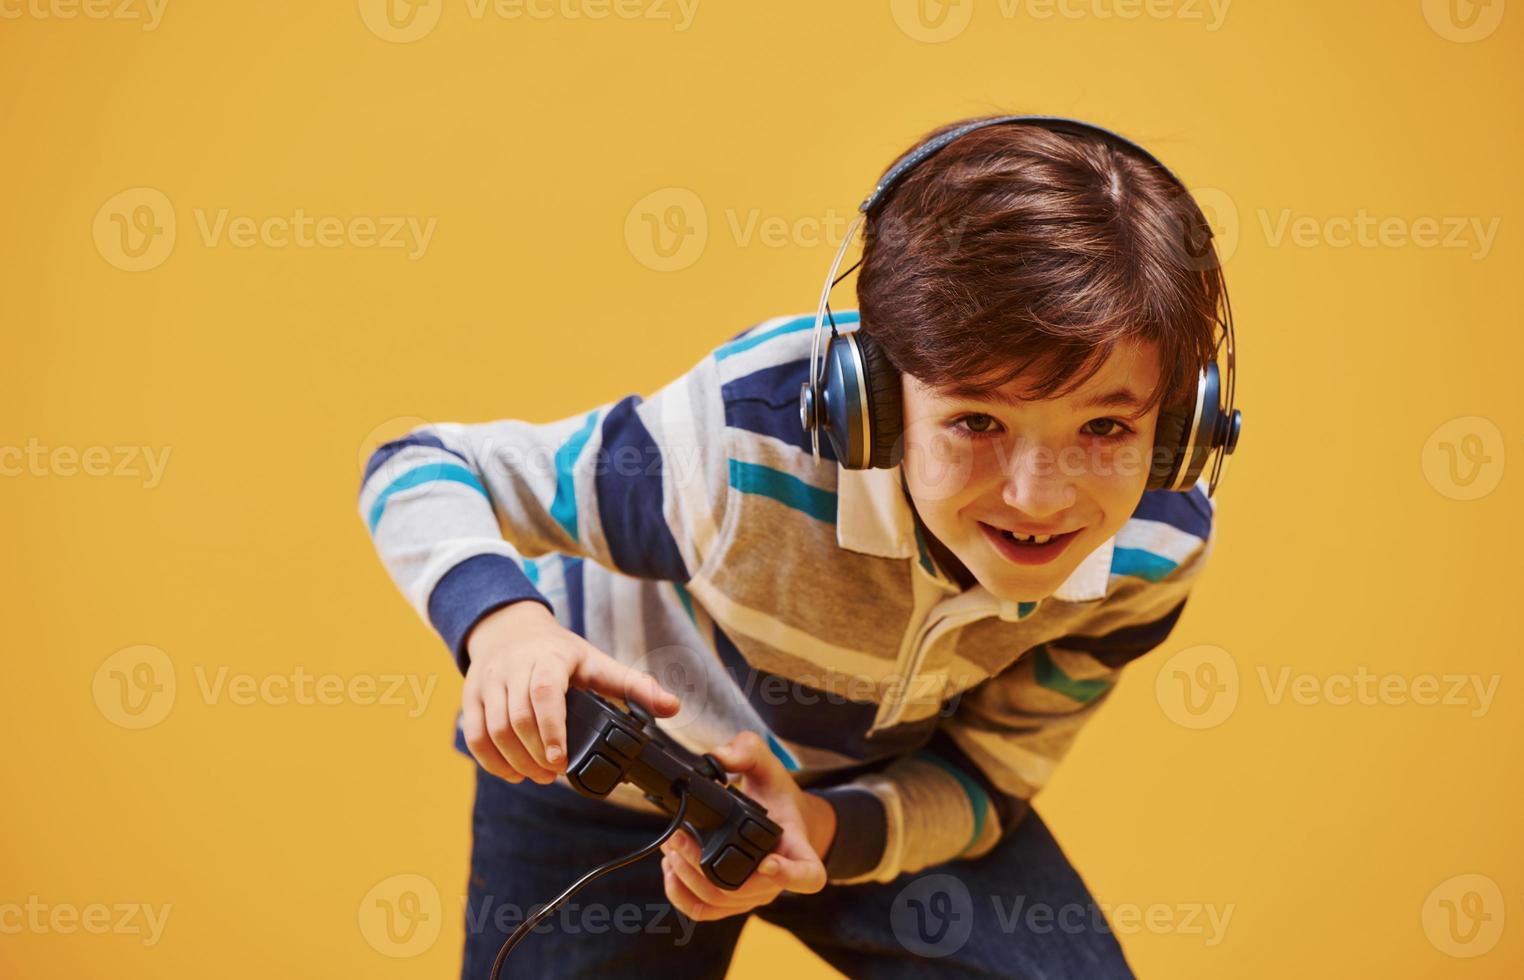 söt liten pojke spelar video spel i de studio mot gul bakgrund foto